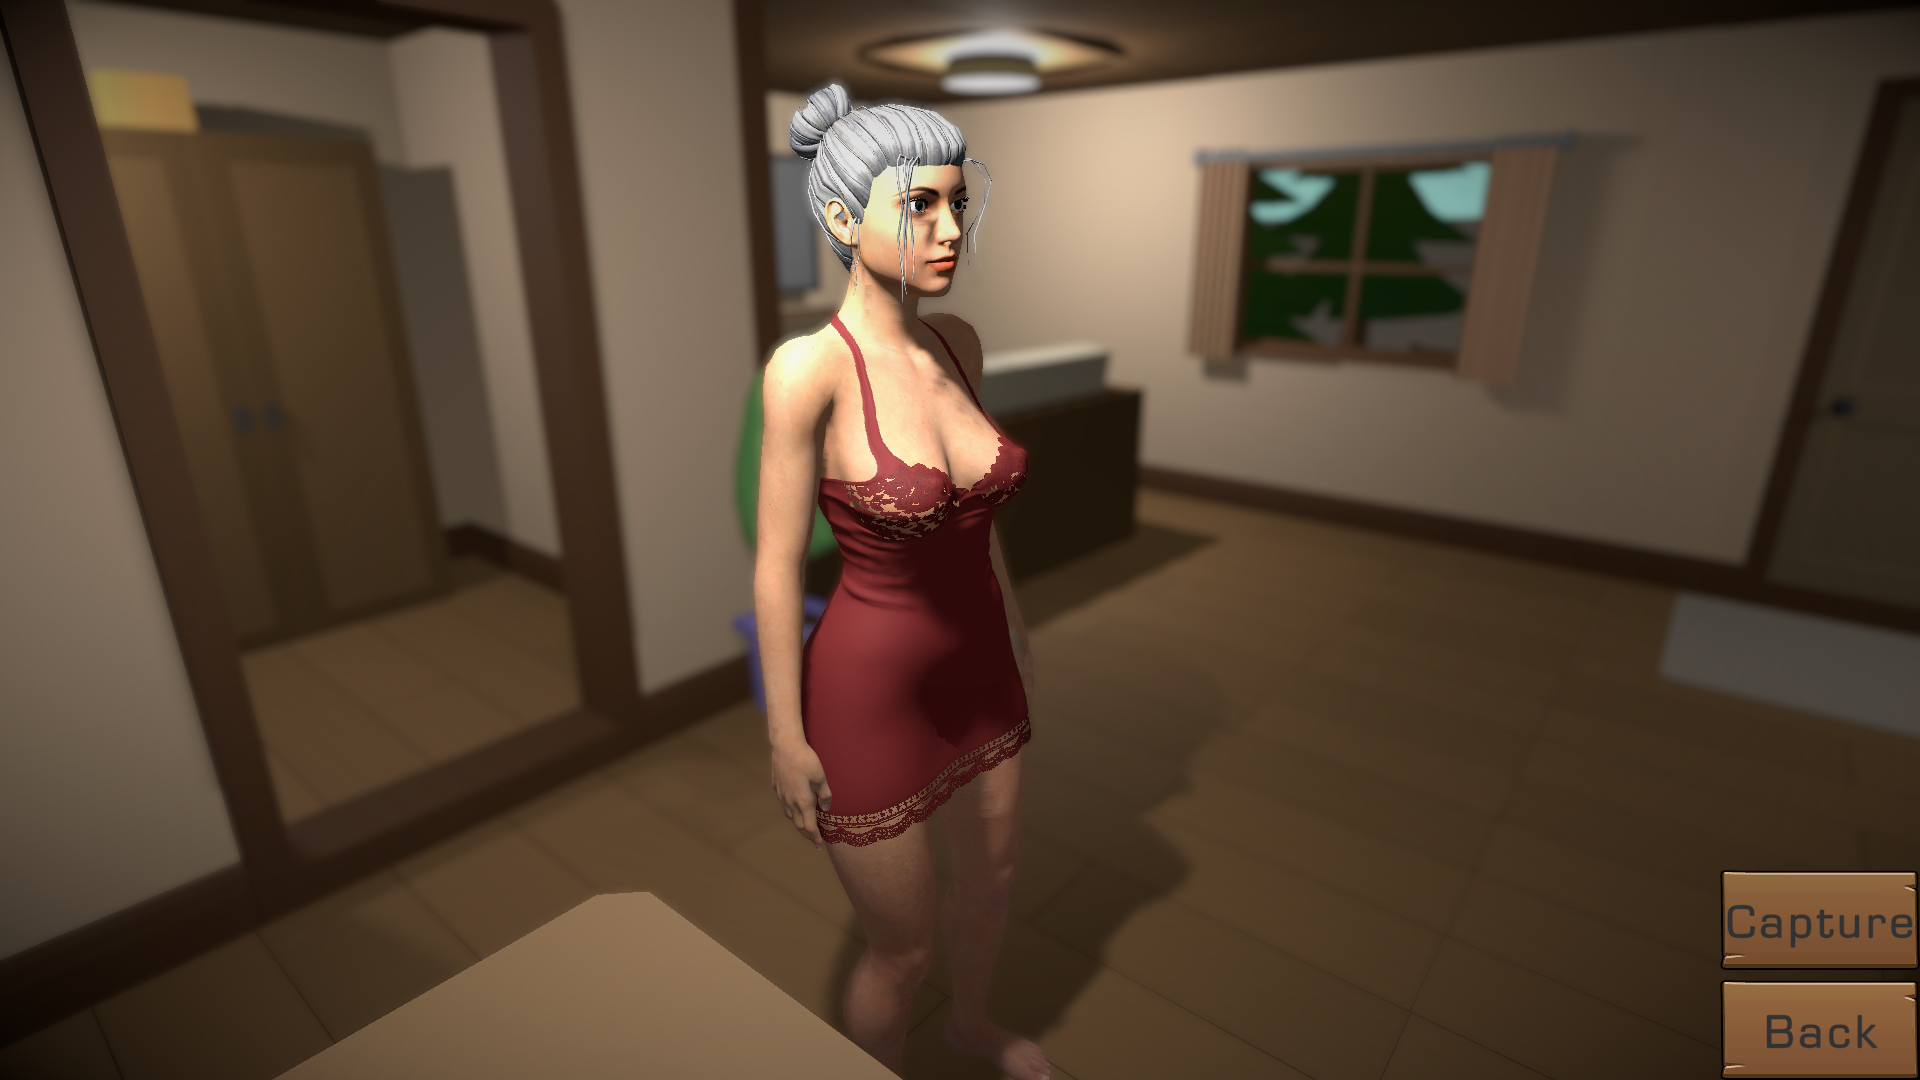 Simple Girl v1.32 - free game download, reviews, mega image